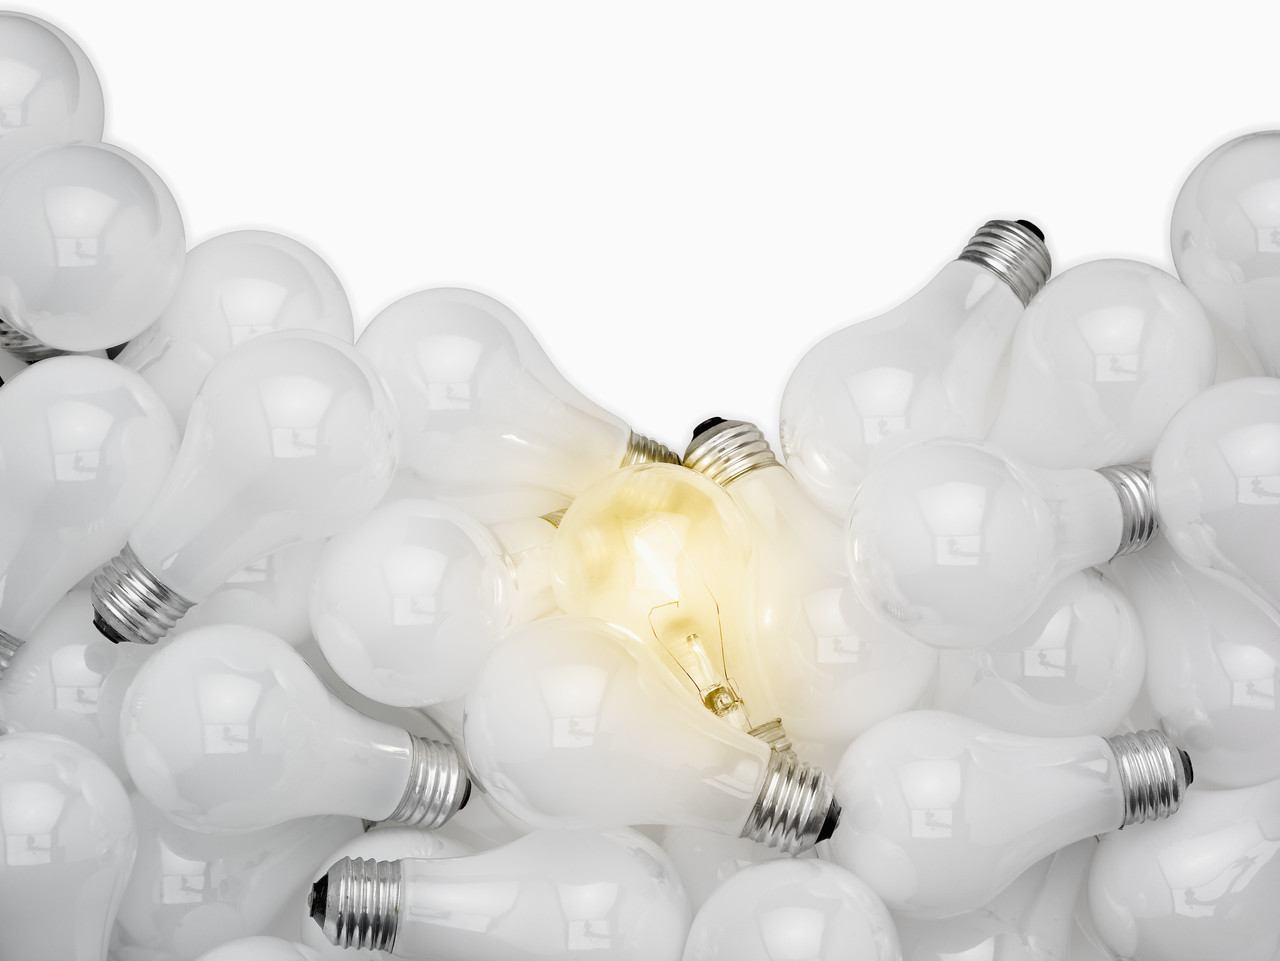 light bulbs with one lit - new ideas